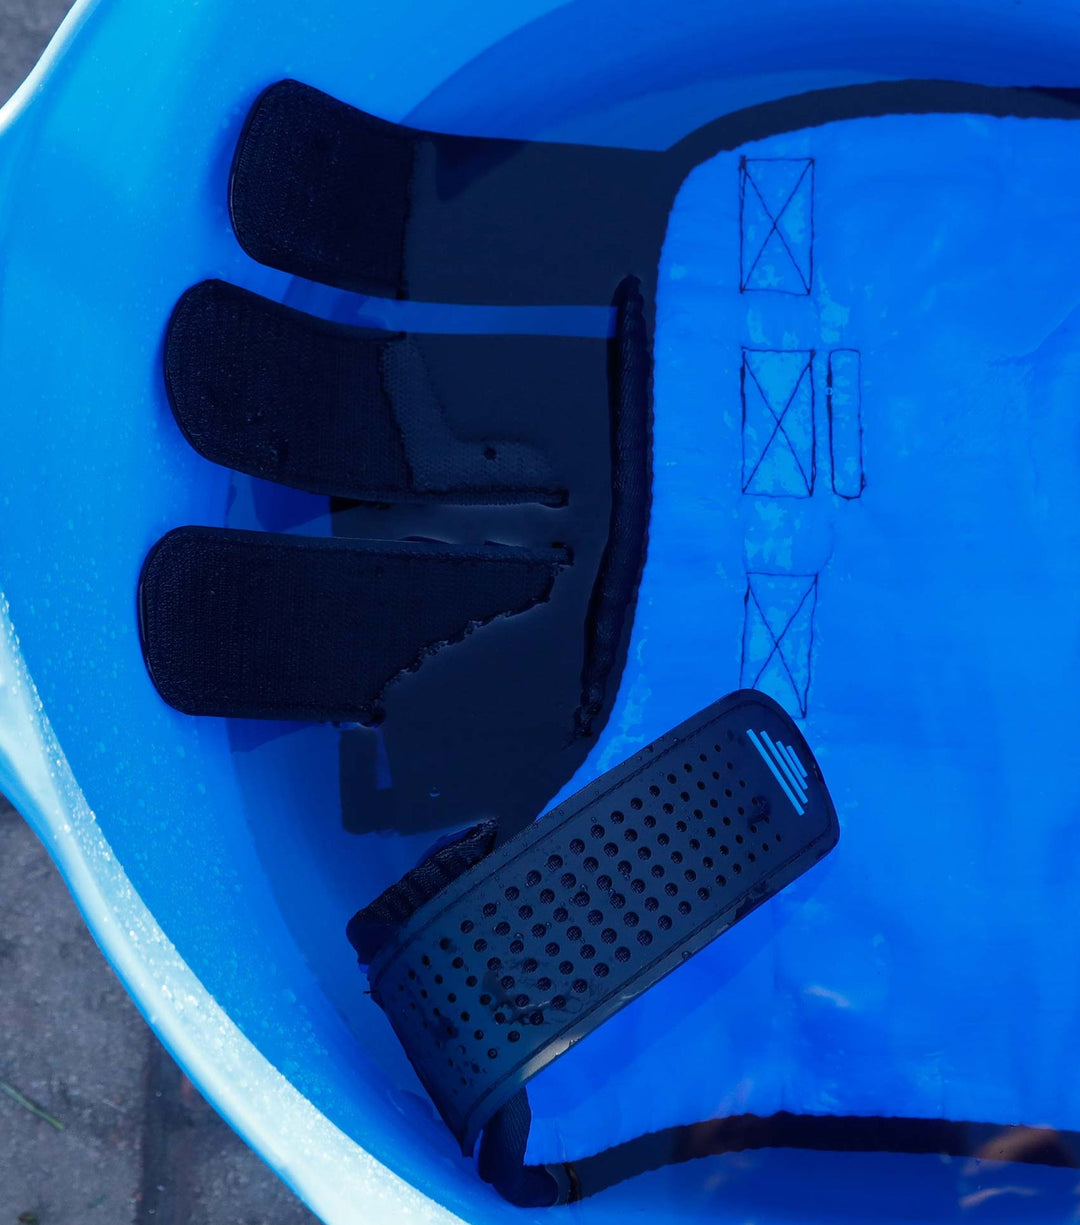 PREMIER EQUINE Cold Water Compression Boots – EQCLUSIVE LTD